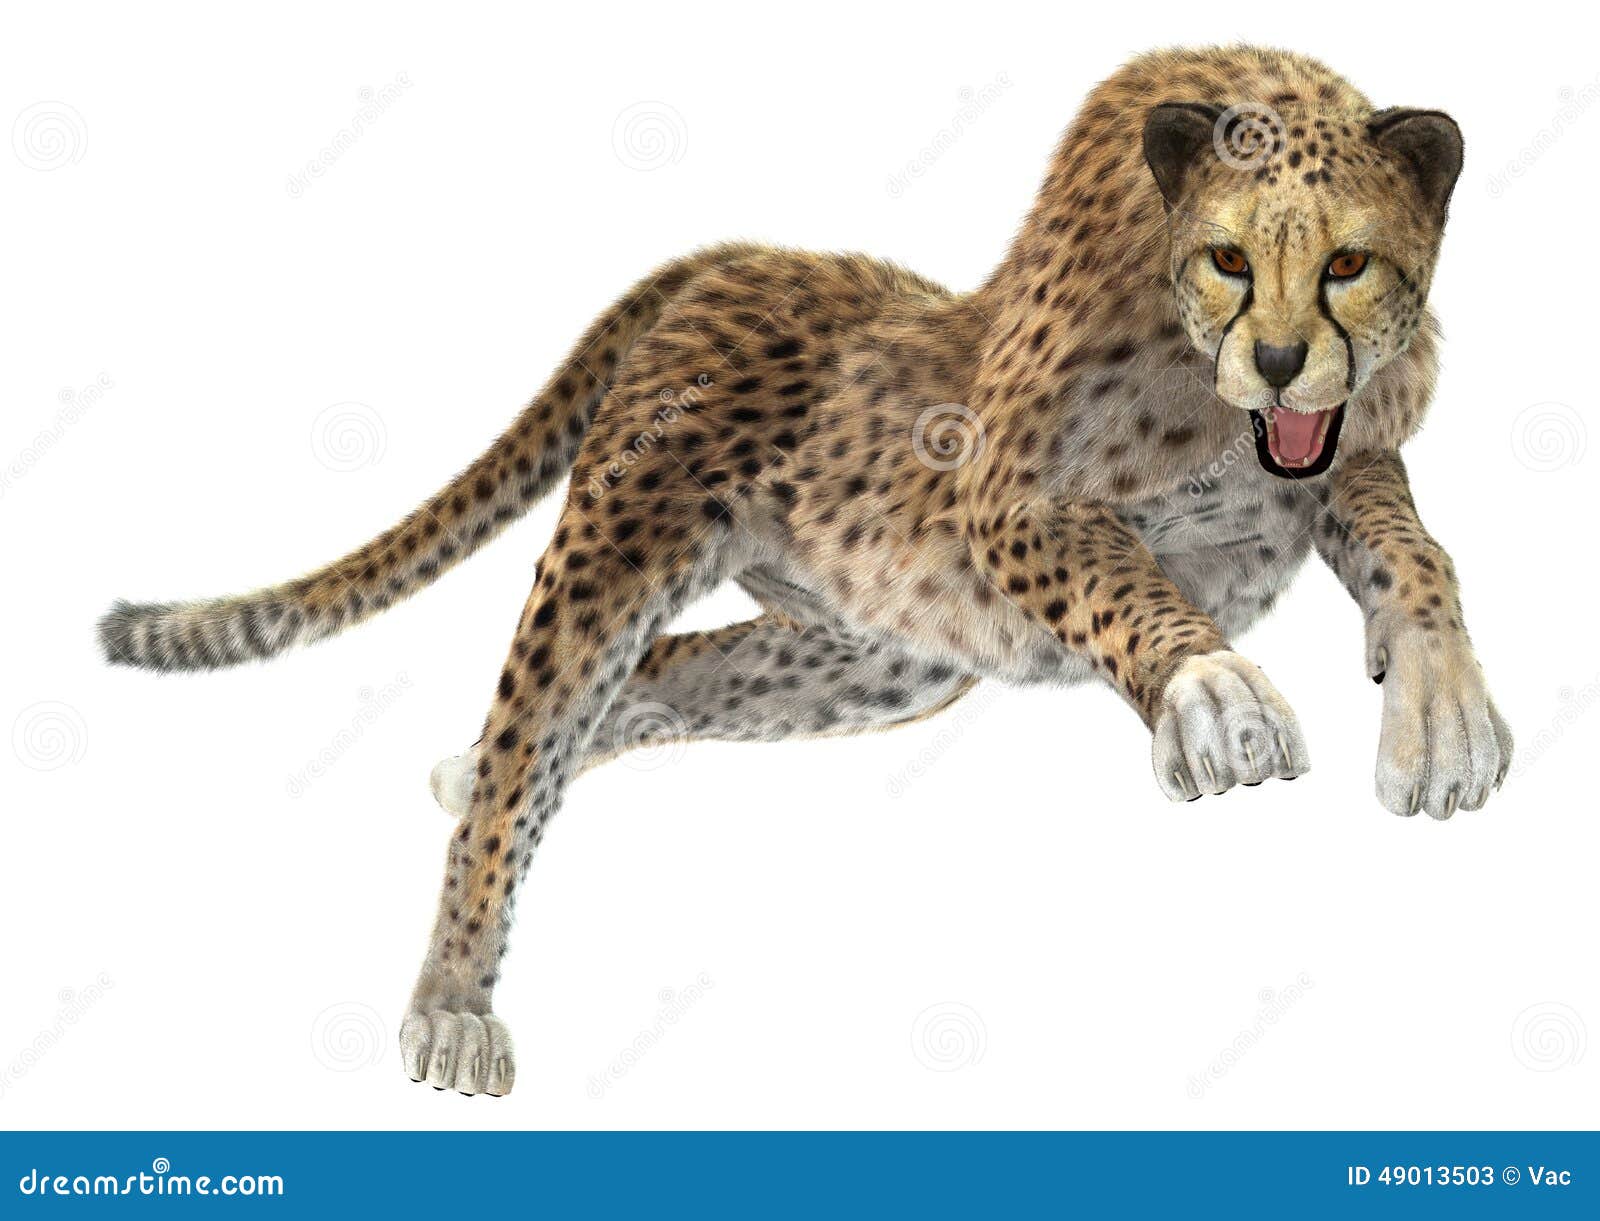 Jumping Cheetah Cartoon Vector | CartoonDealer.com #53147339